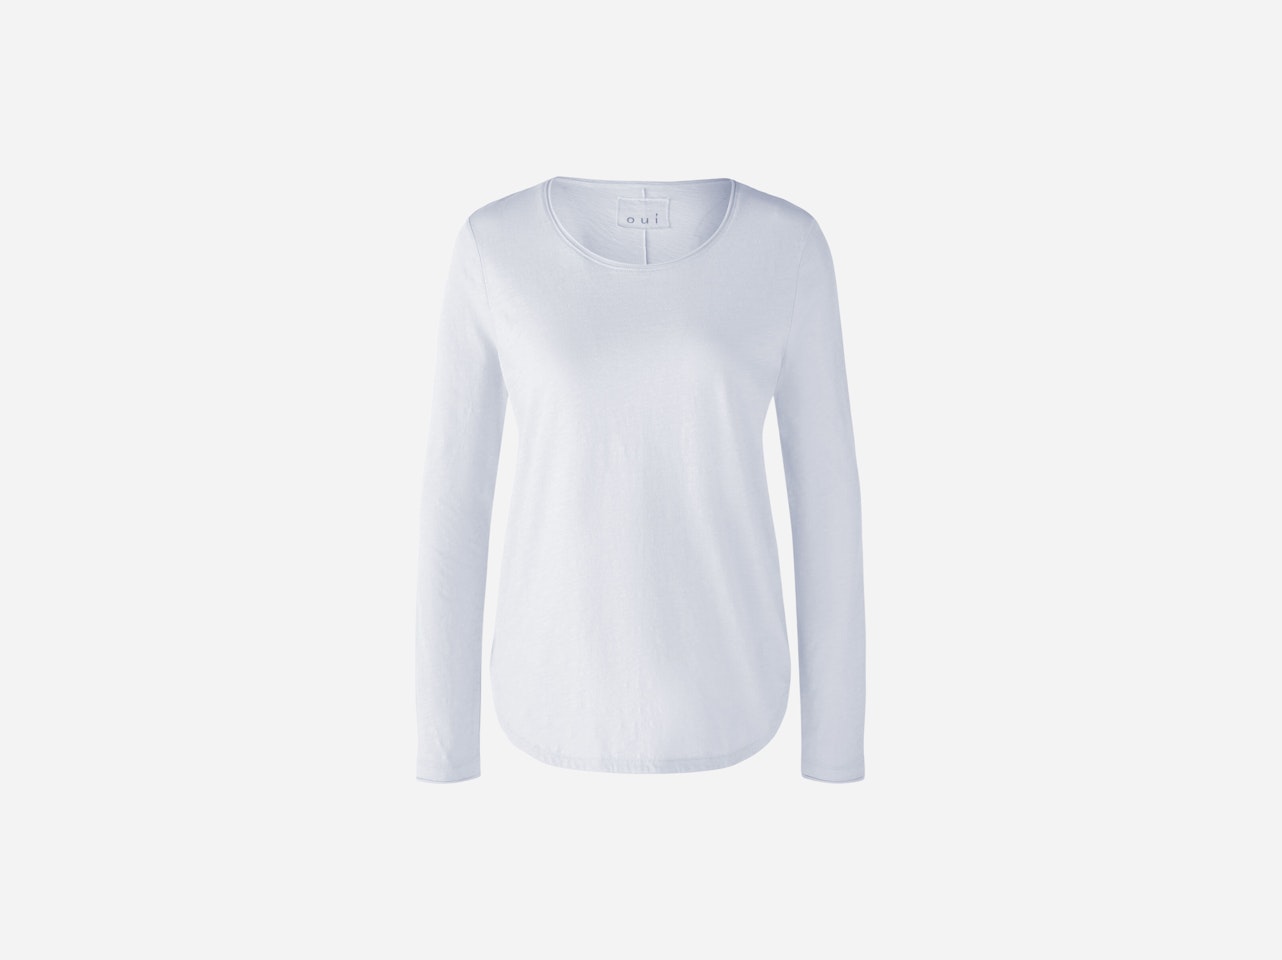 Bild 1 von Langarmshirt aus softer Flamé-Ware in optic white | Oui